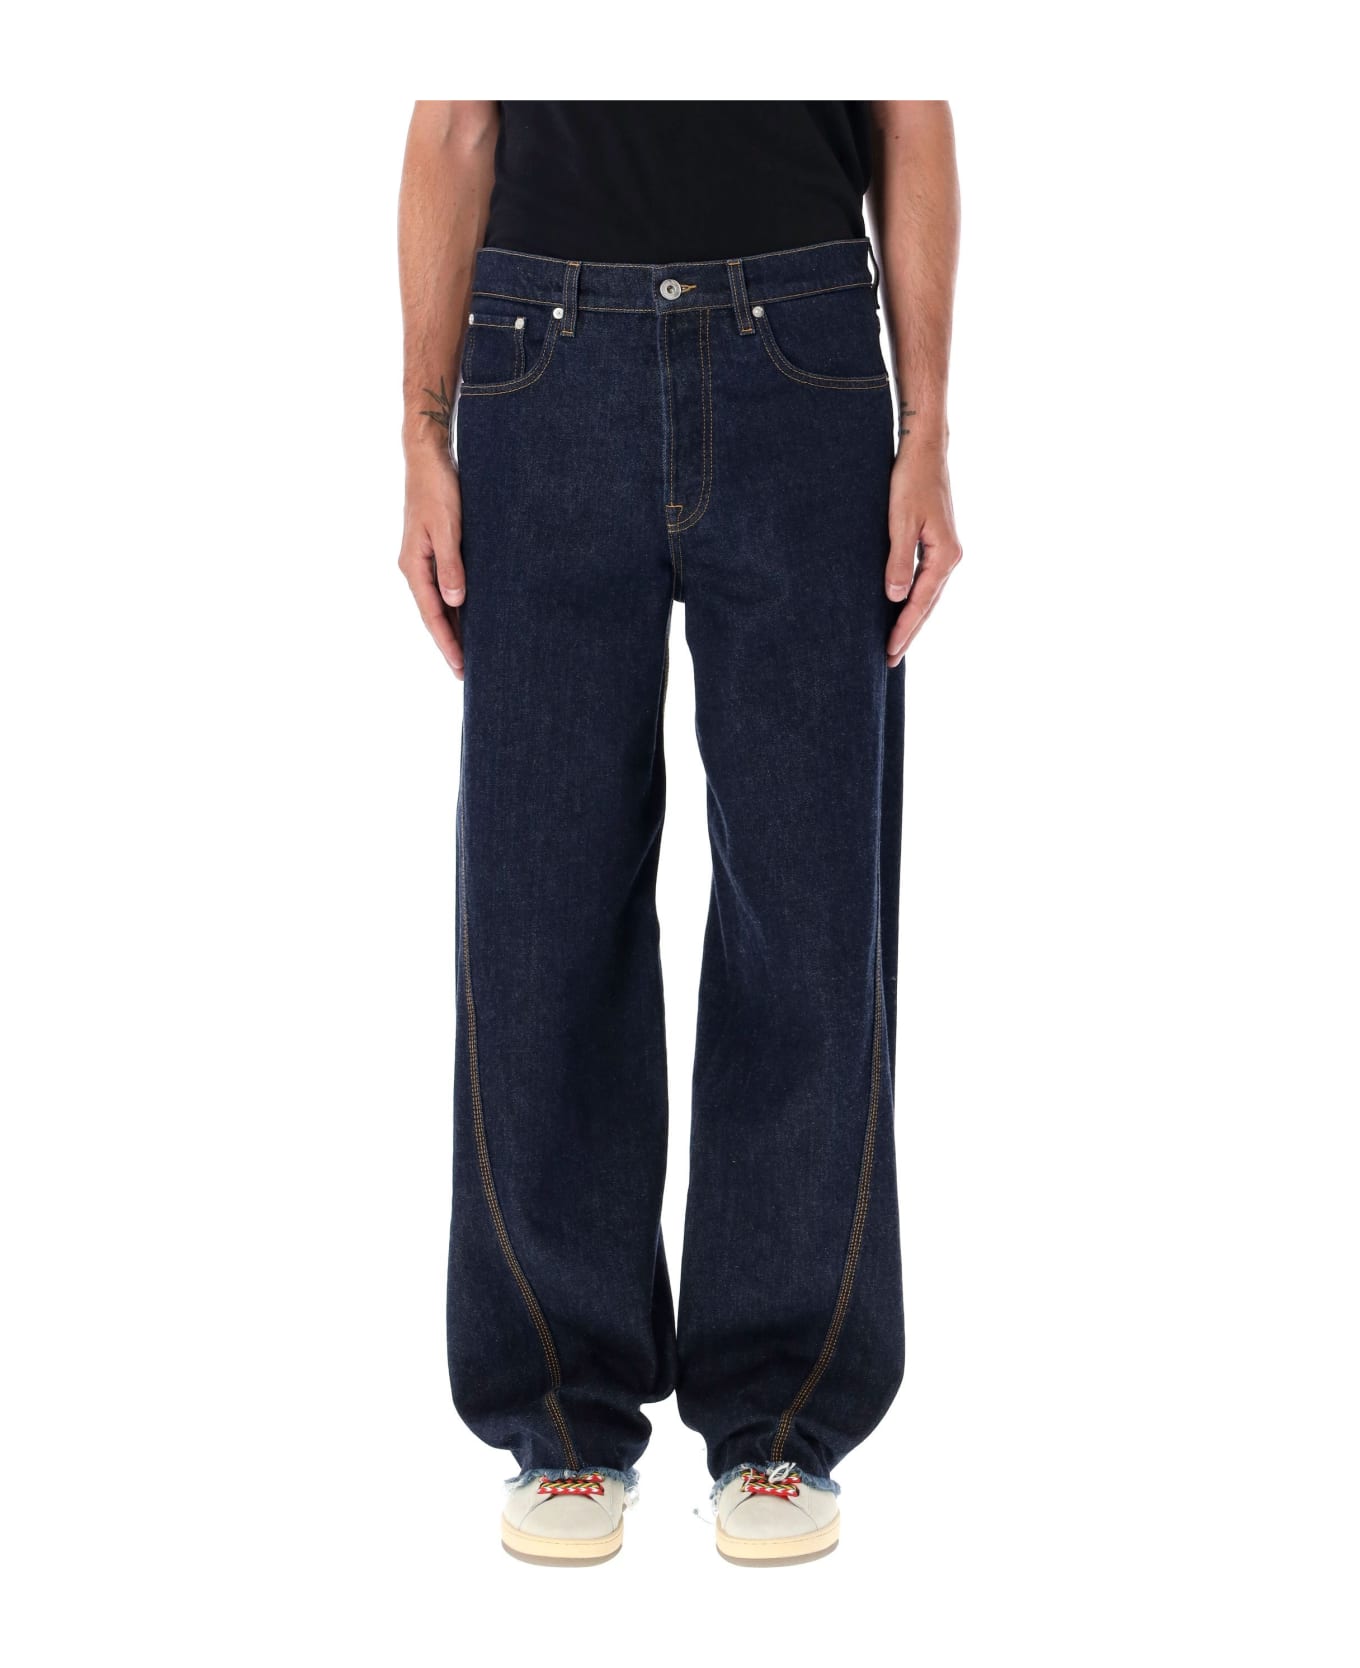 Lanvin Twisted Denim Jeans - BLUE